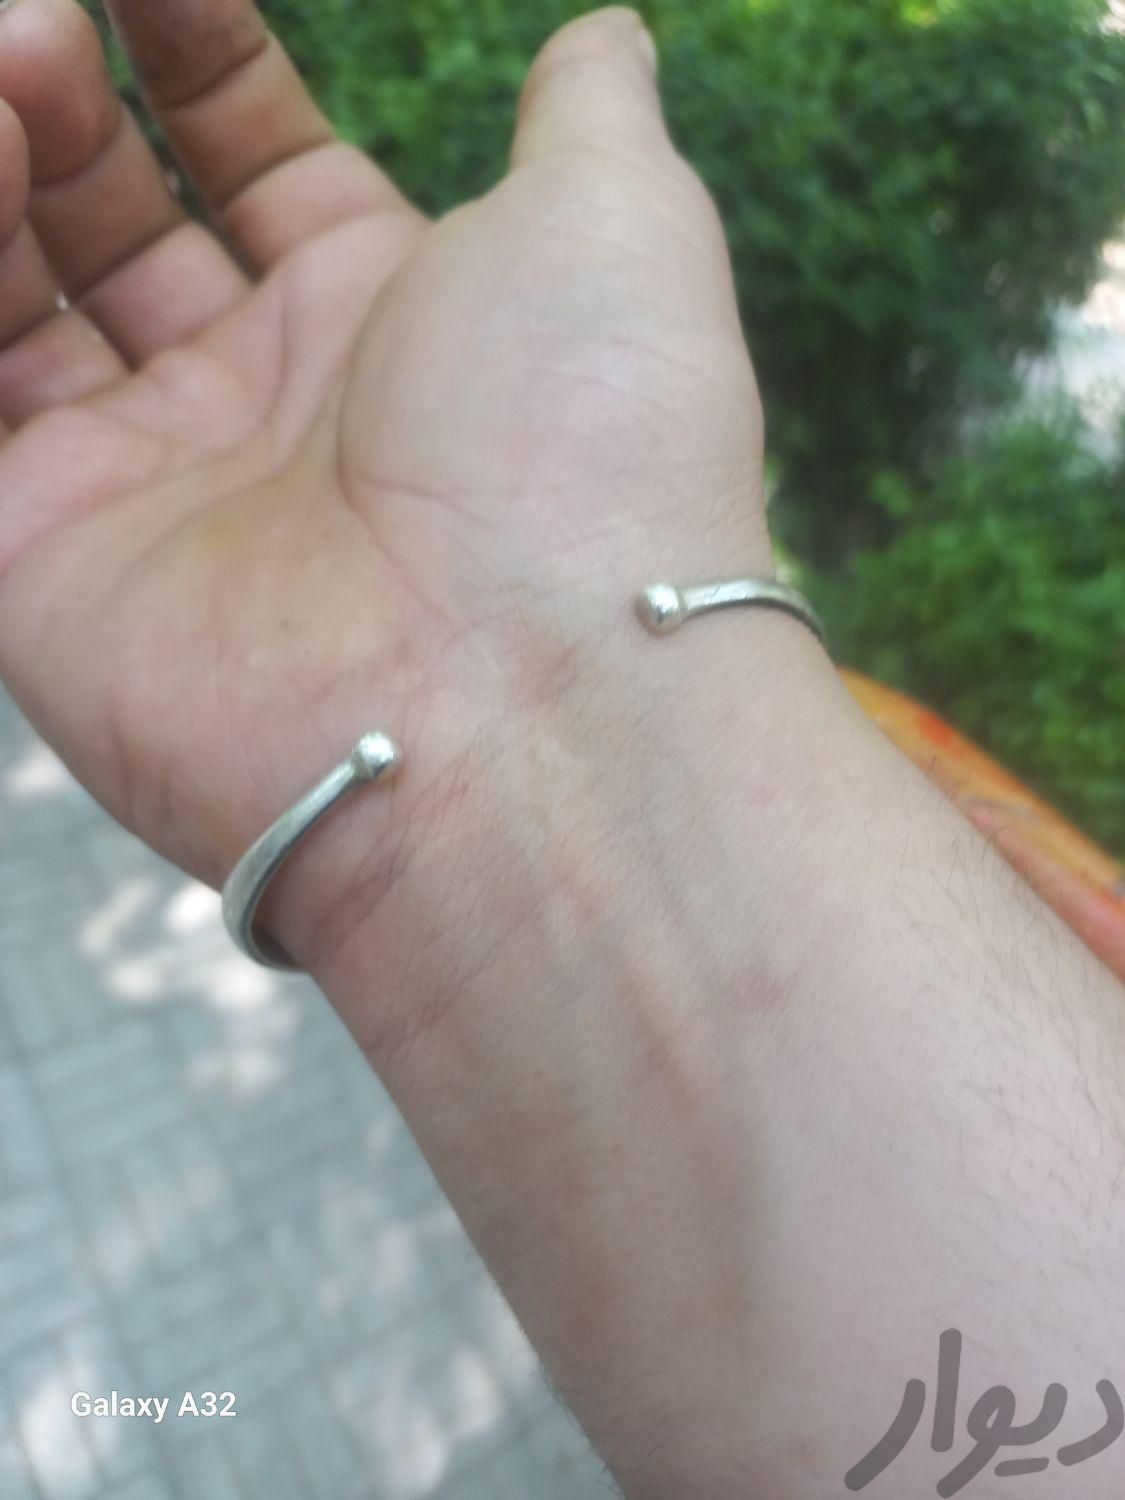 دستبند نقره خلخال کهنه دو مهر|جواهرات|تهران, مینا|دیوار